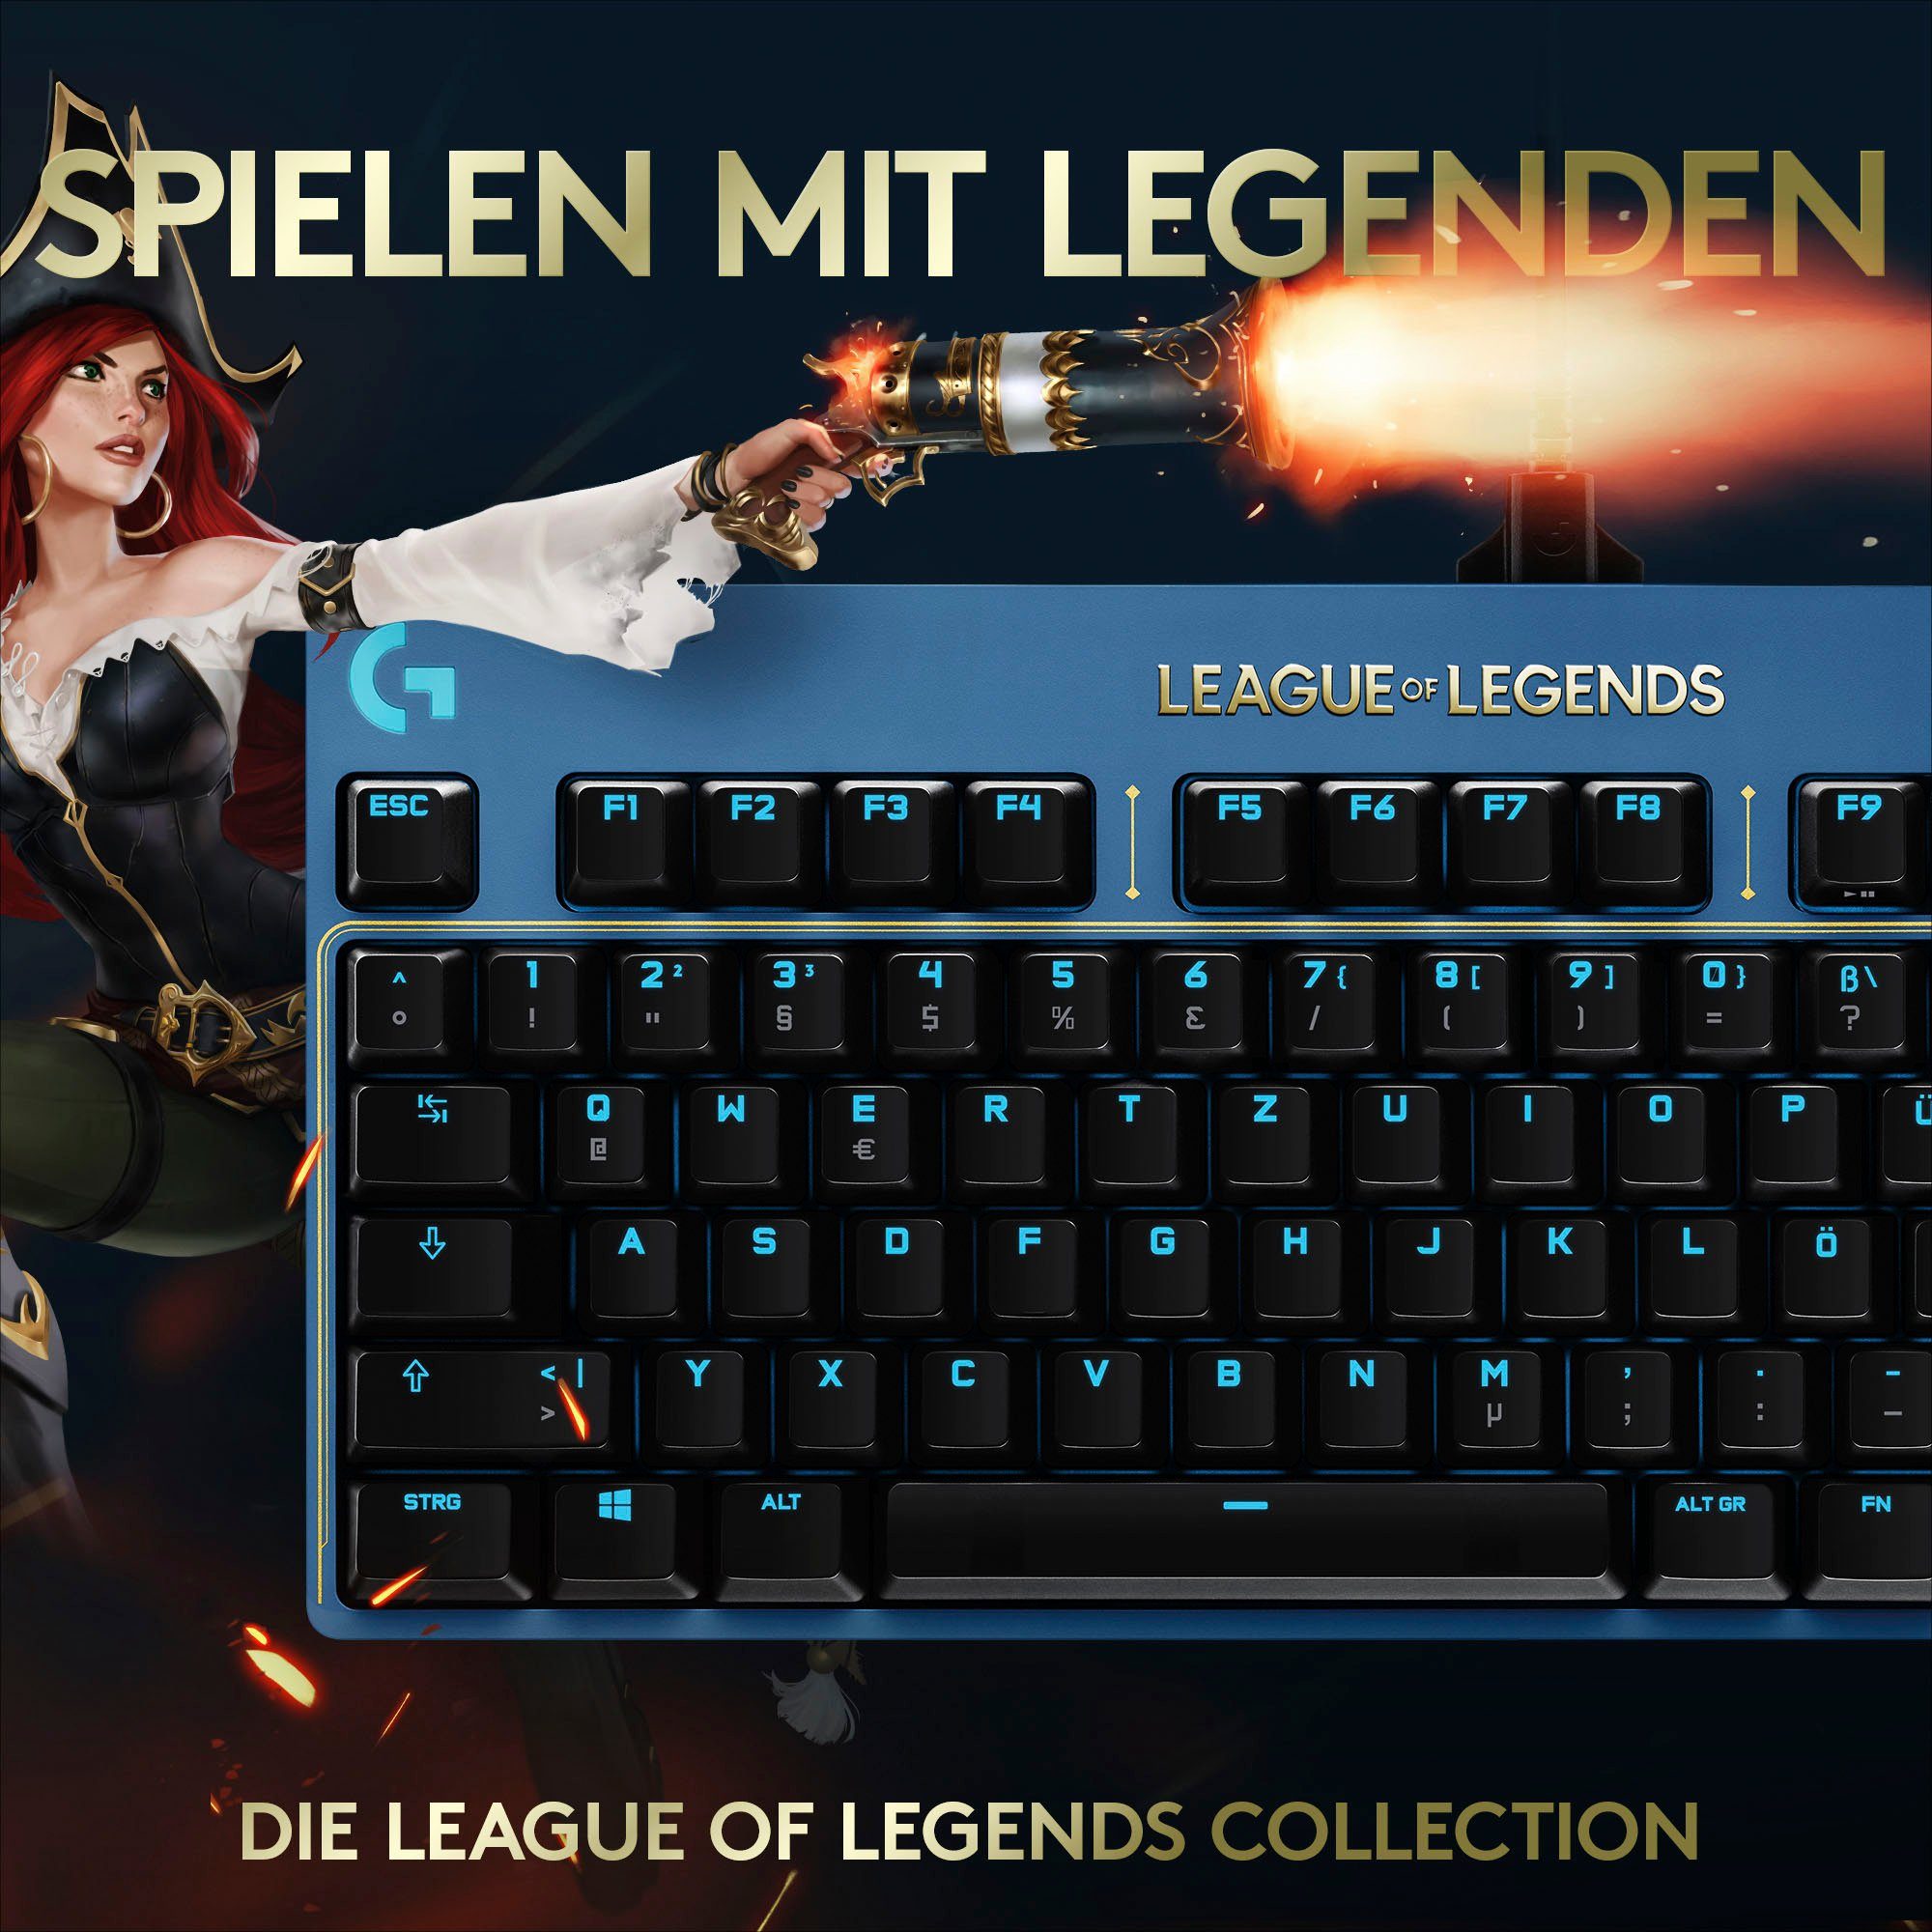 Edition Legends Logitech League of G G Gaming-Tastatur PRO